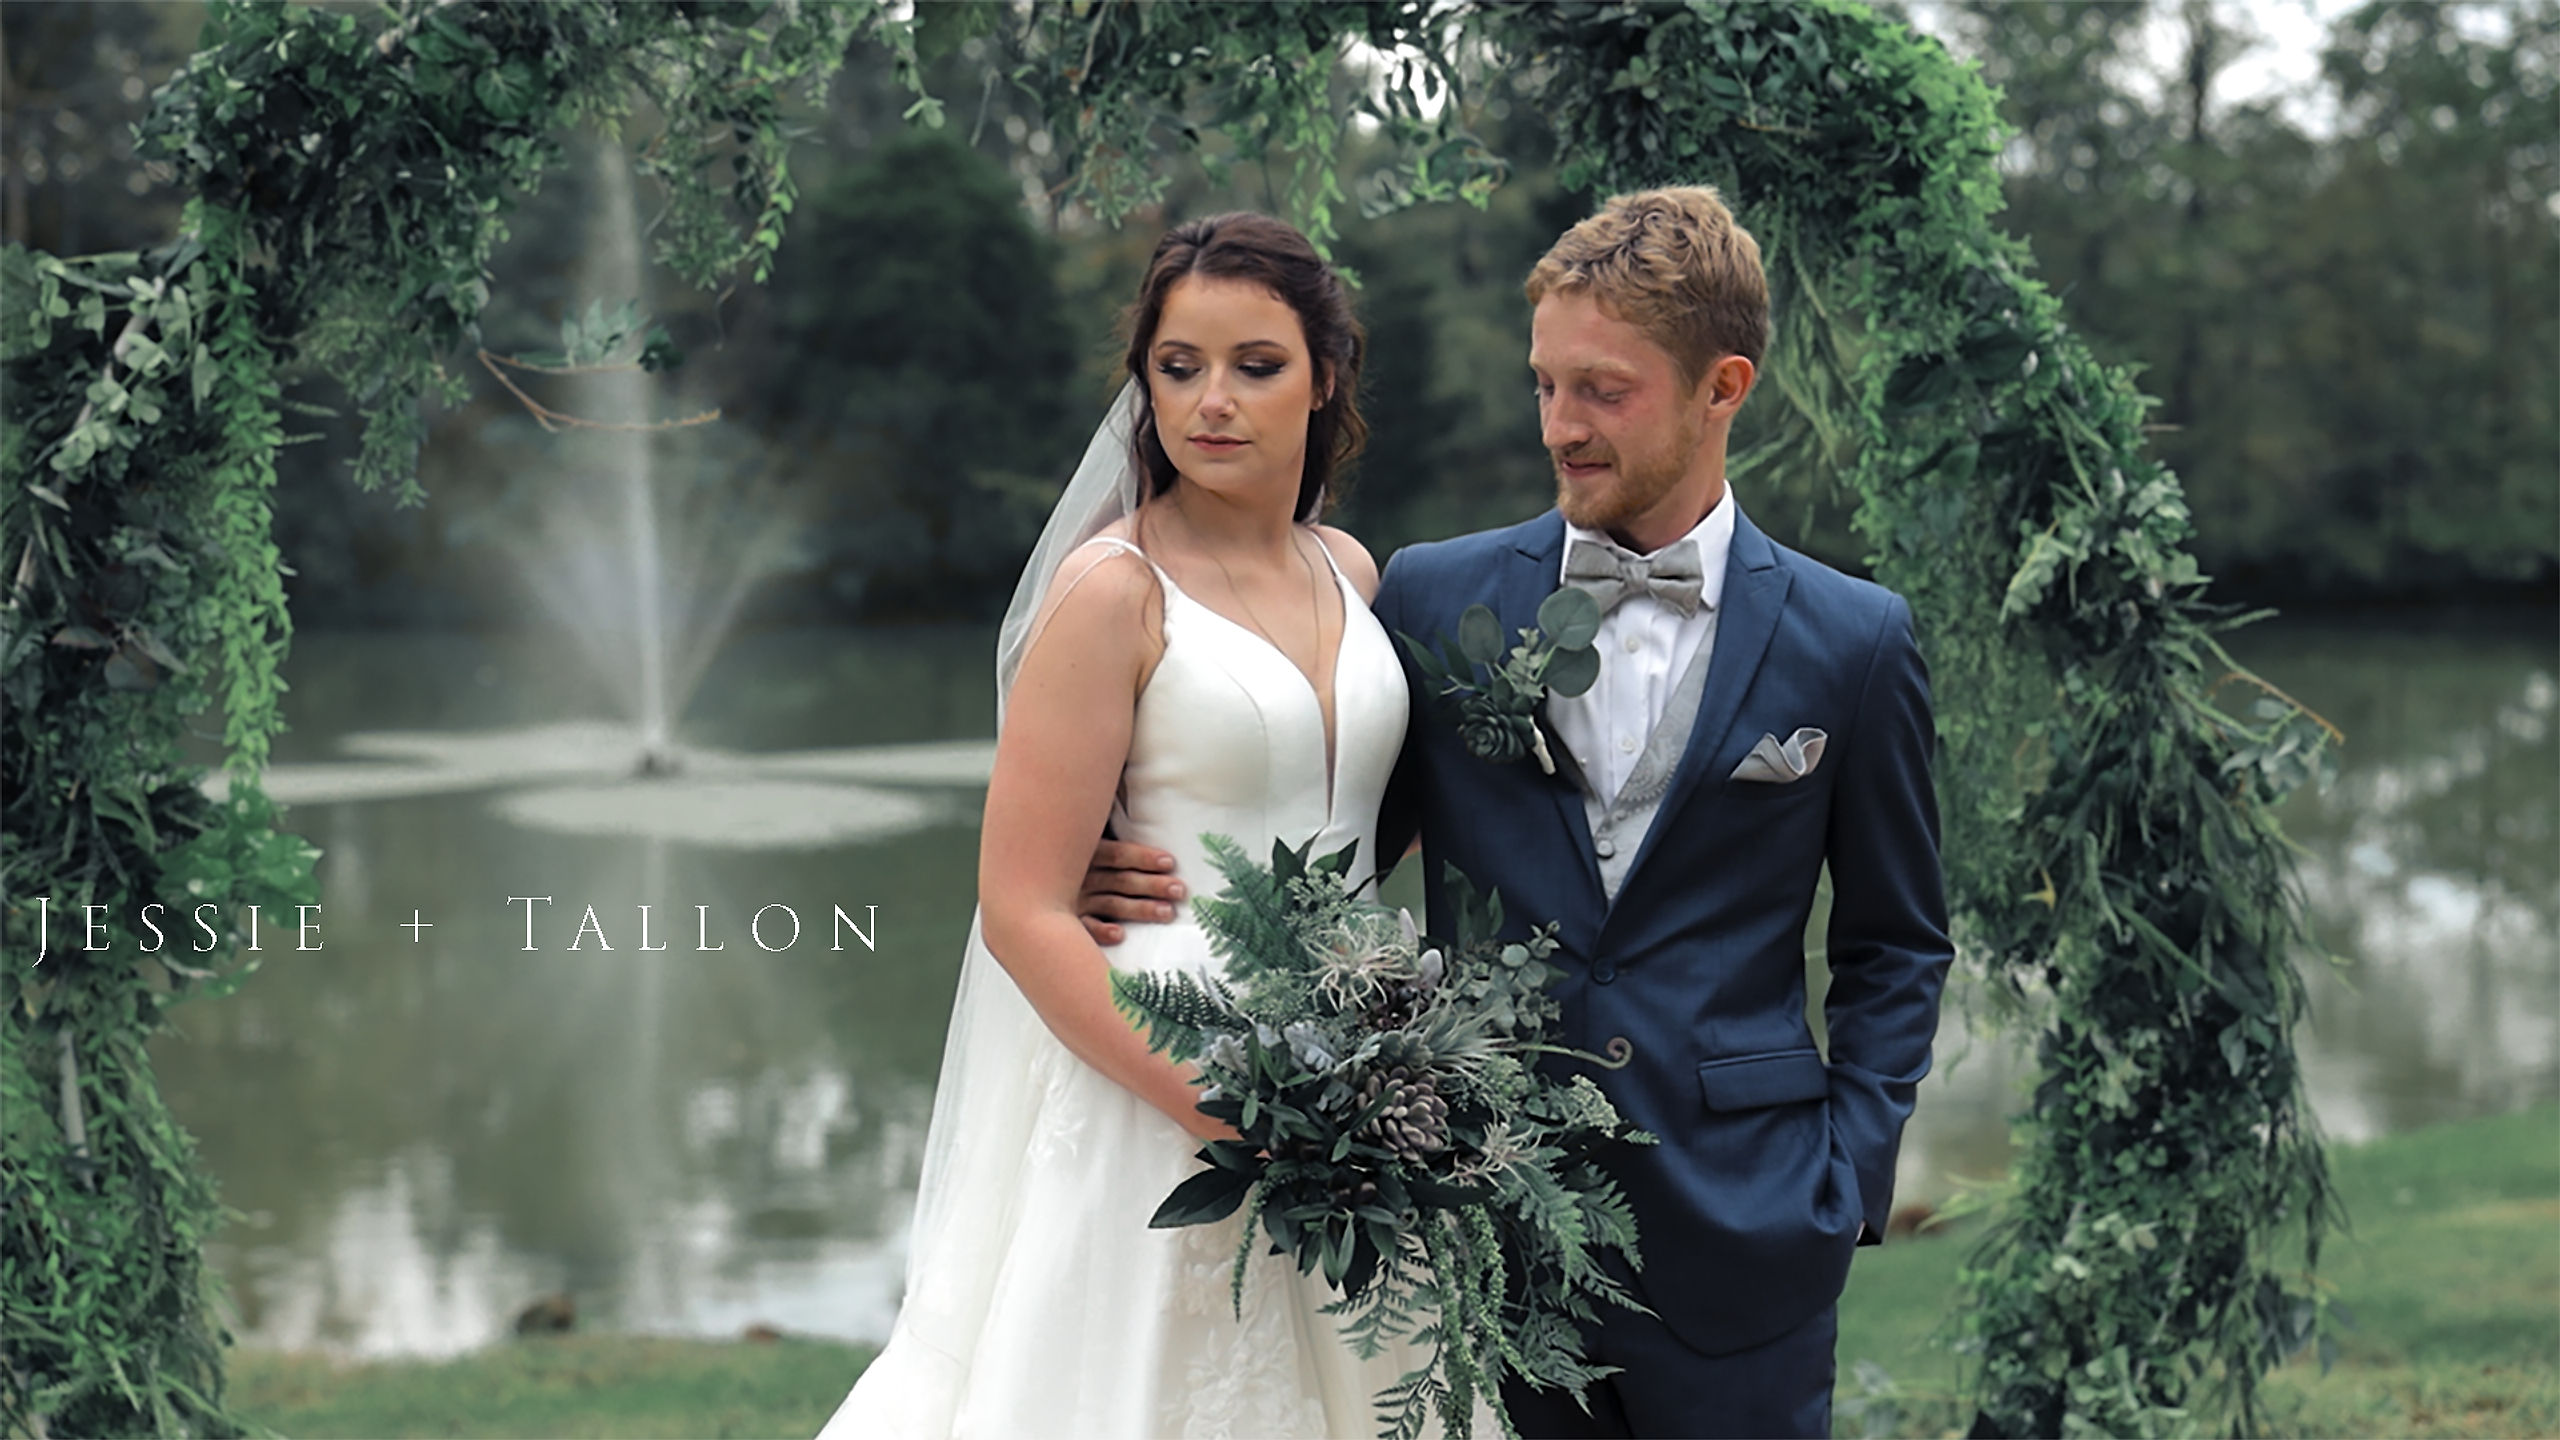 Jessie + Tallon Wedding Film